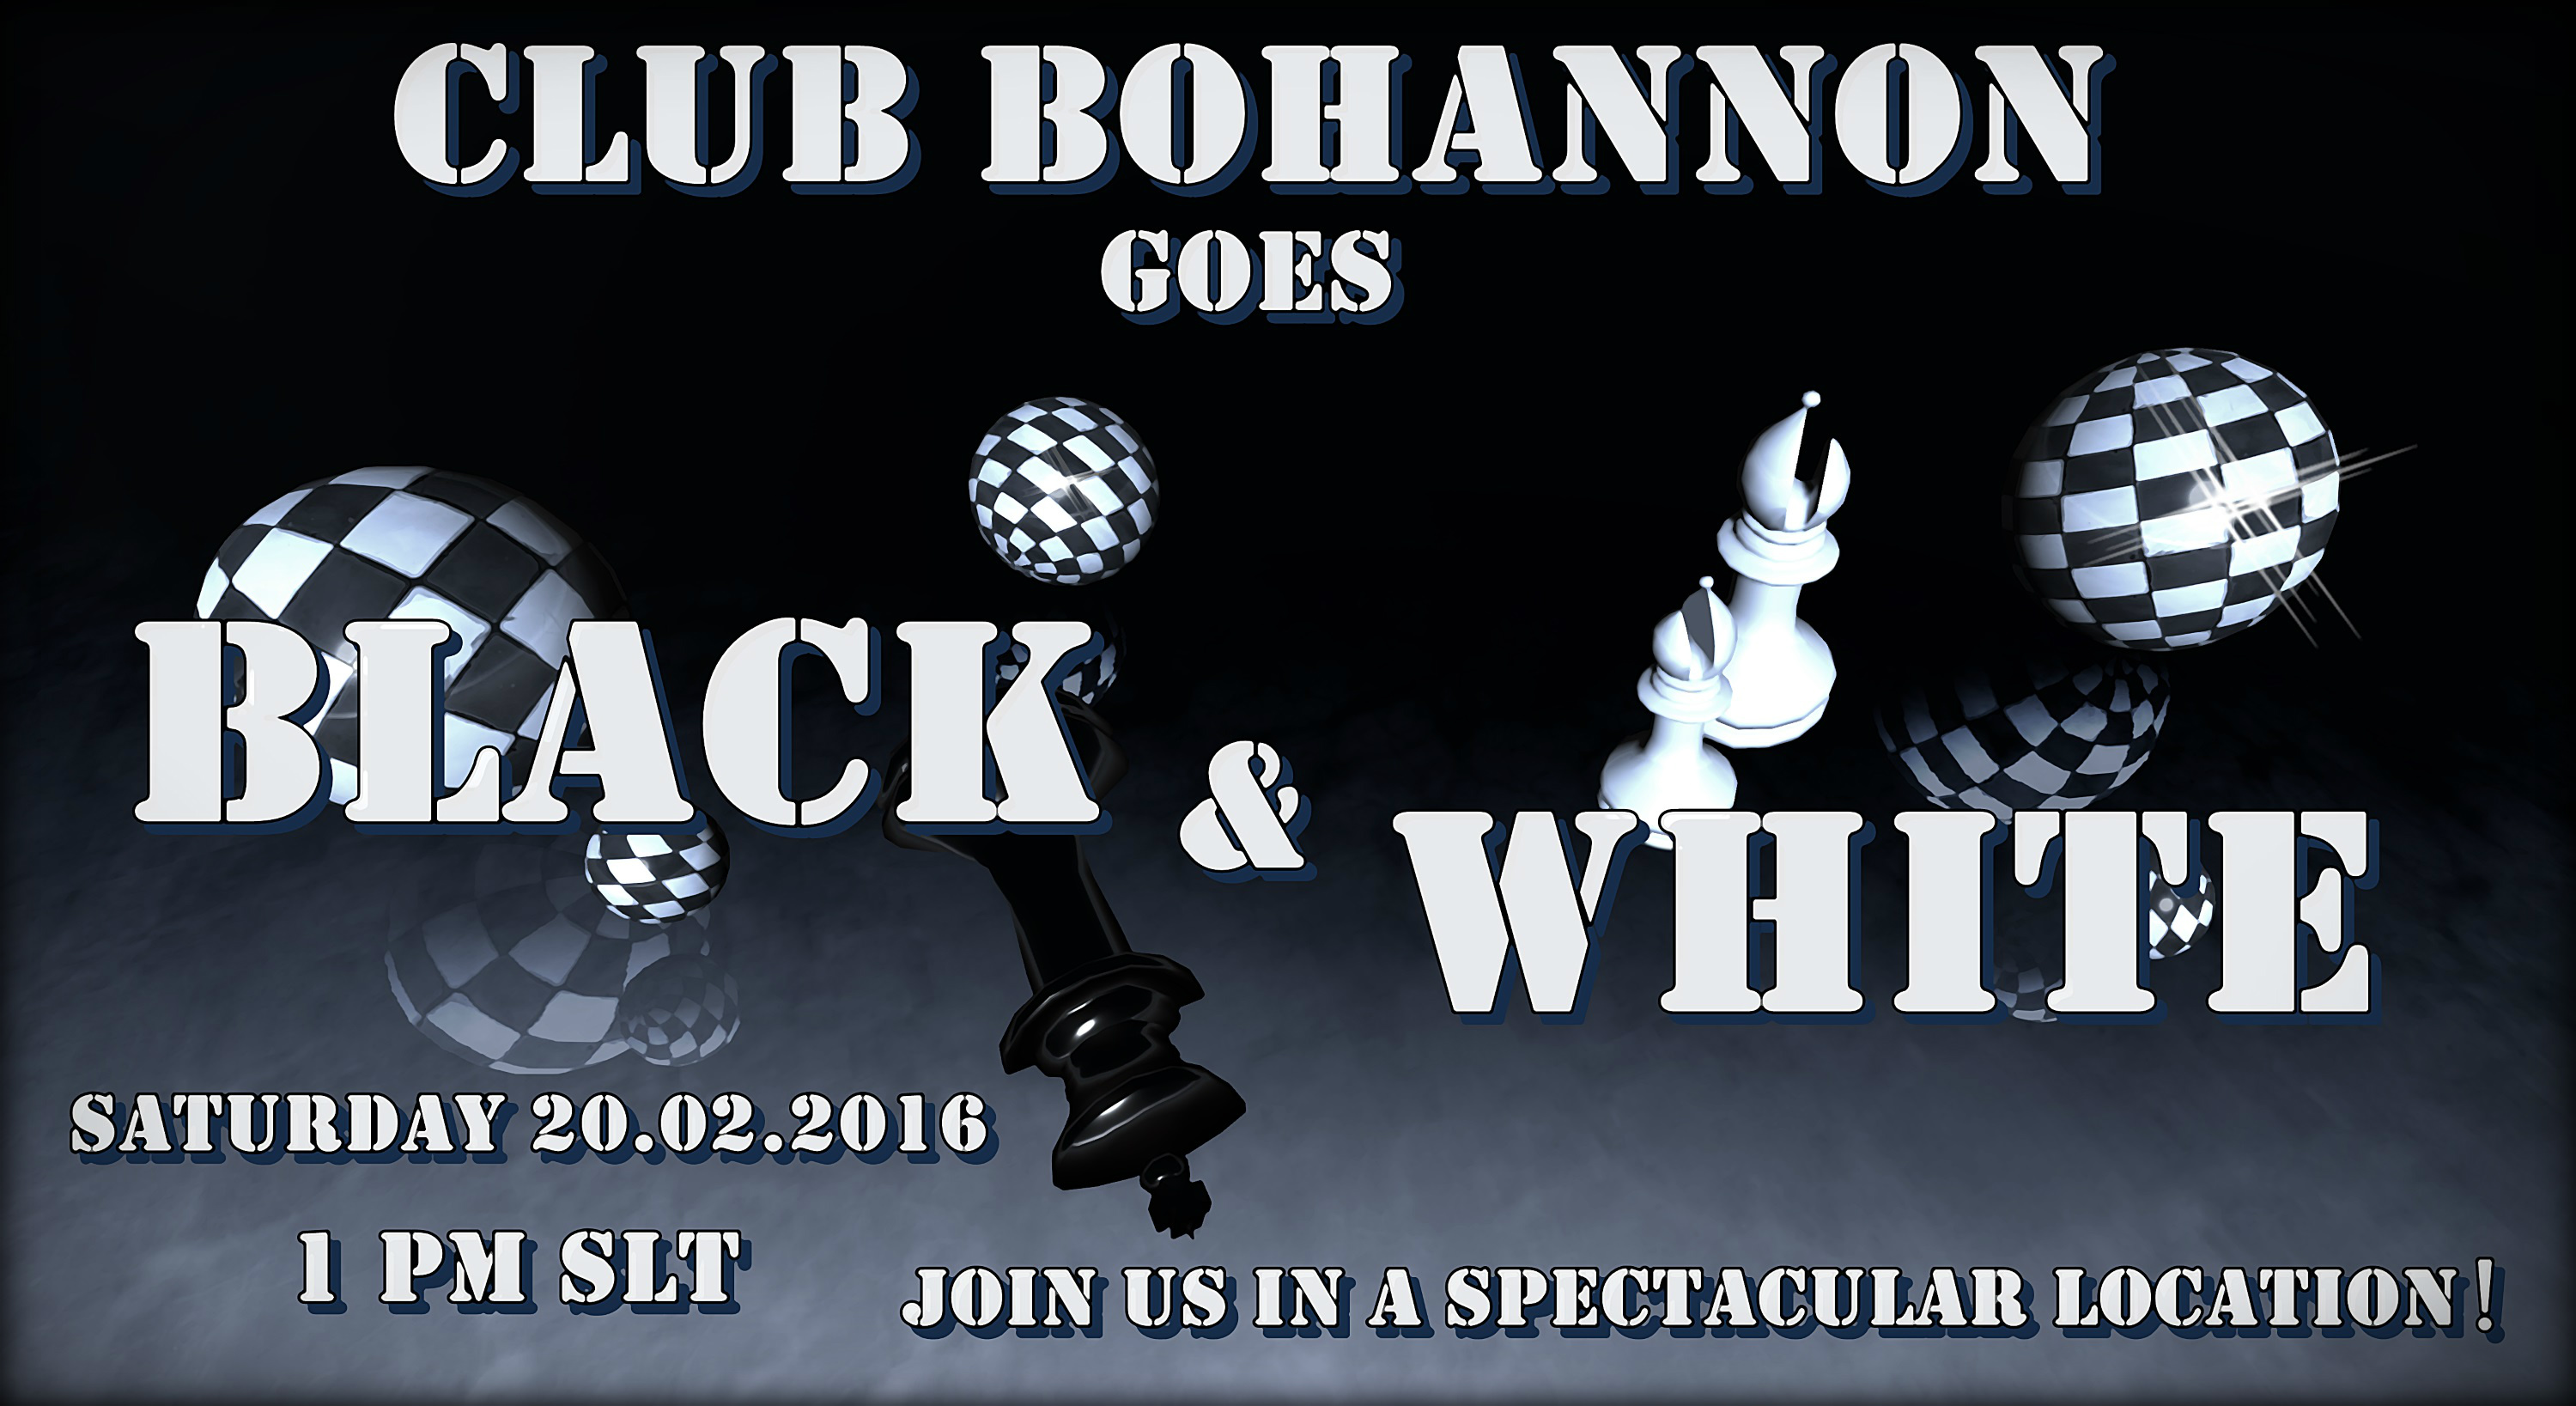 bohannon-black-and-white-event-wurfi.jpg